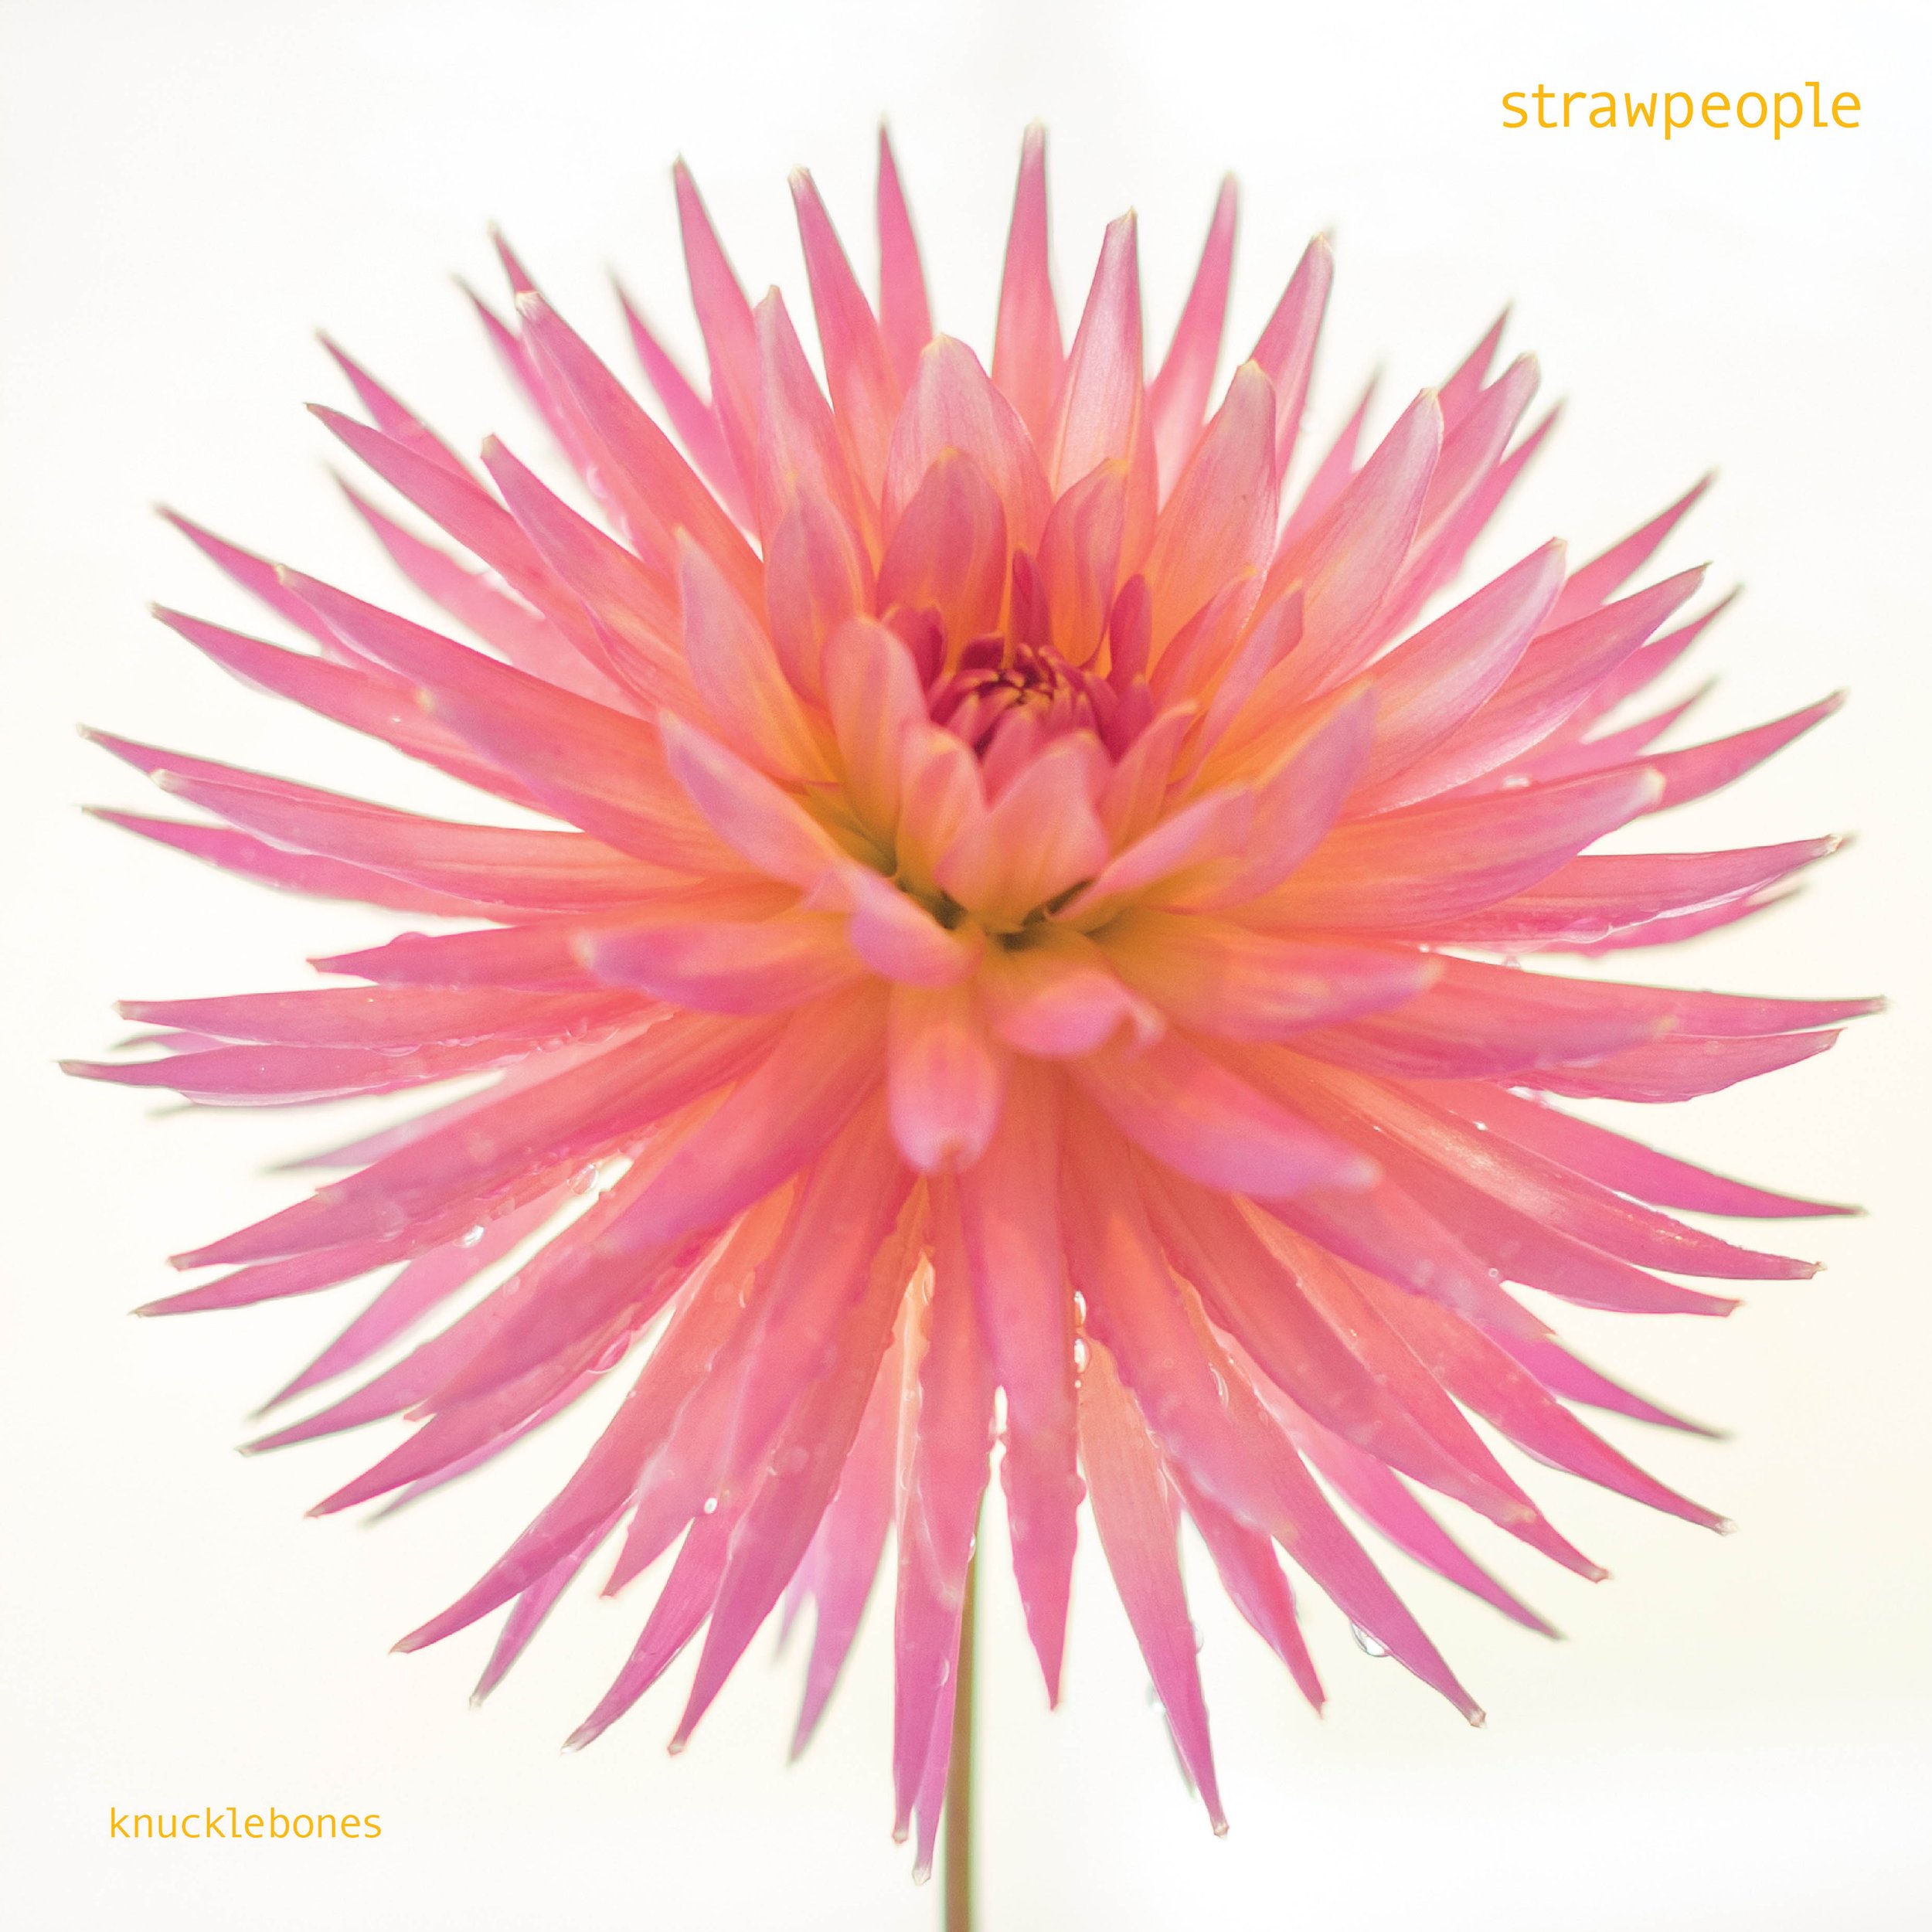 Strawpeople 'Knucklebones' // Album release publicity